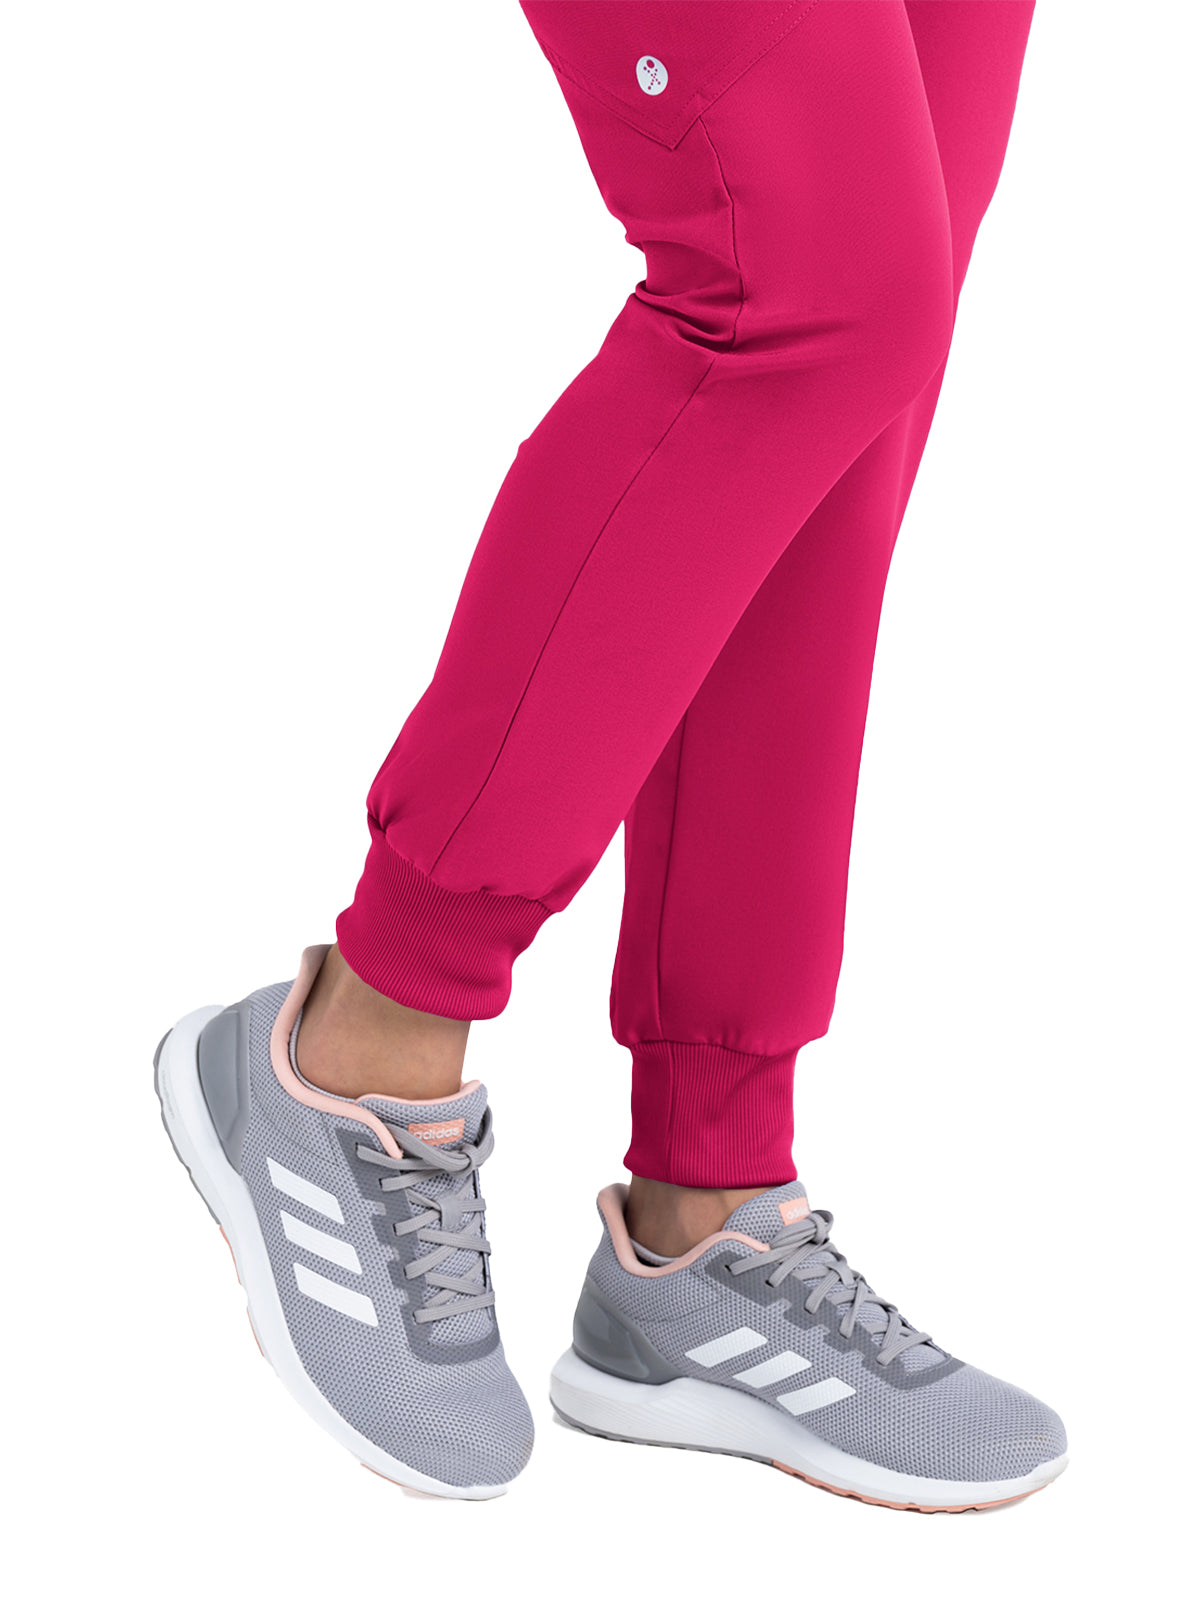 Women's Active Jogger Pant - 1529 - Pink